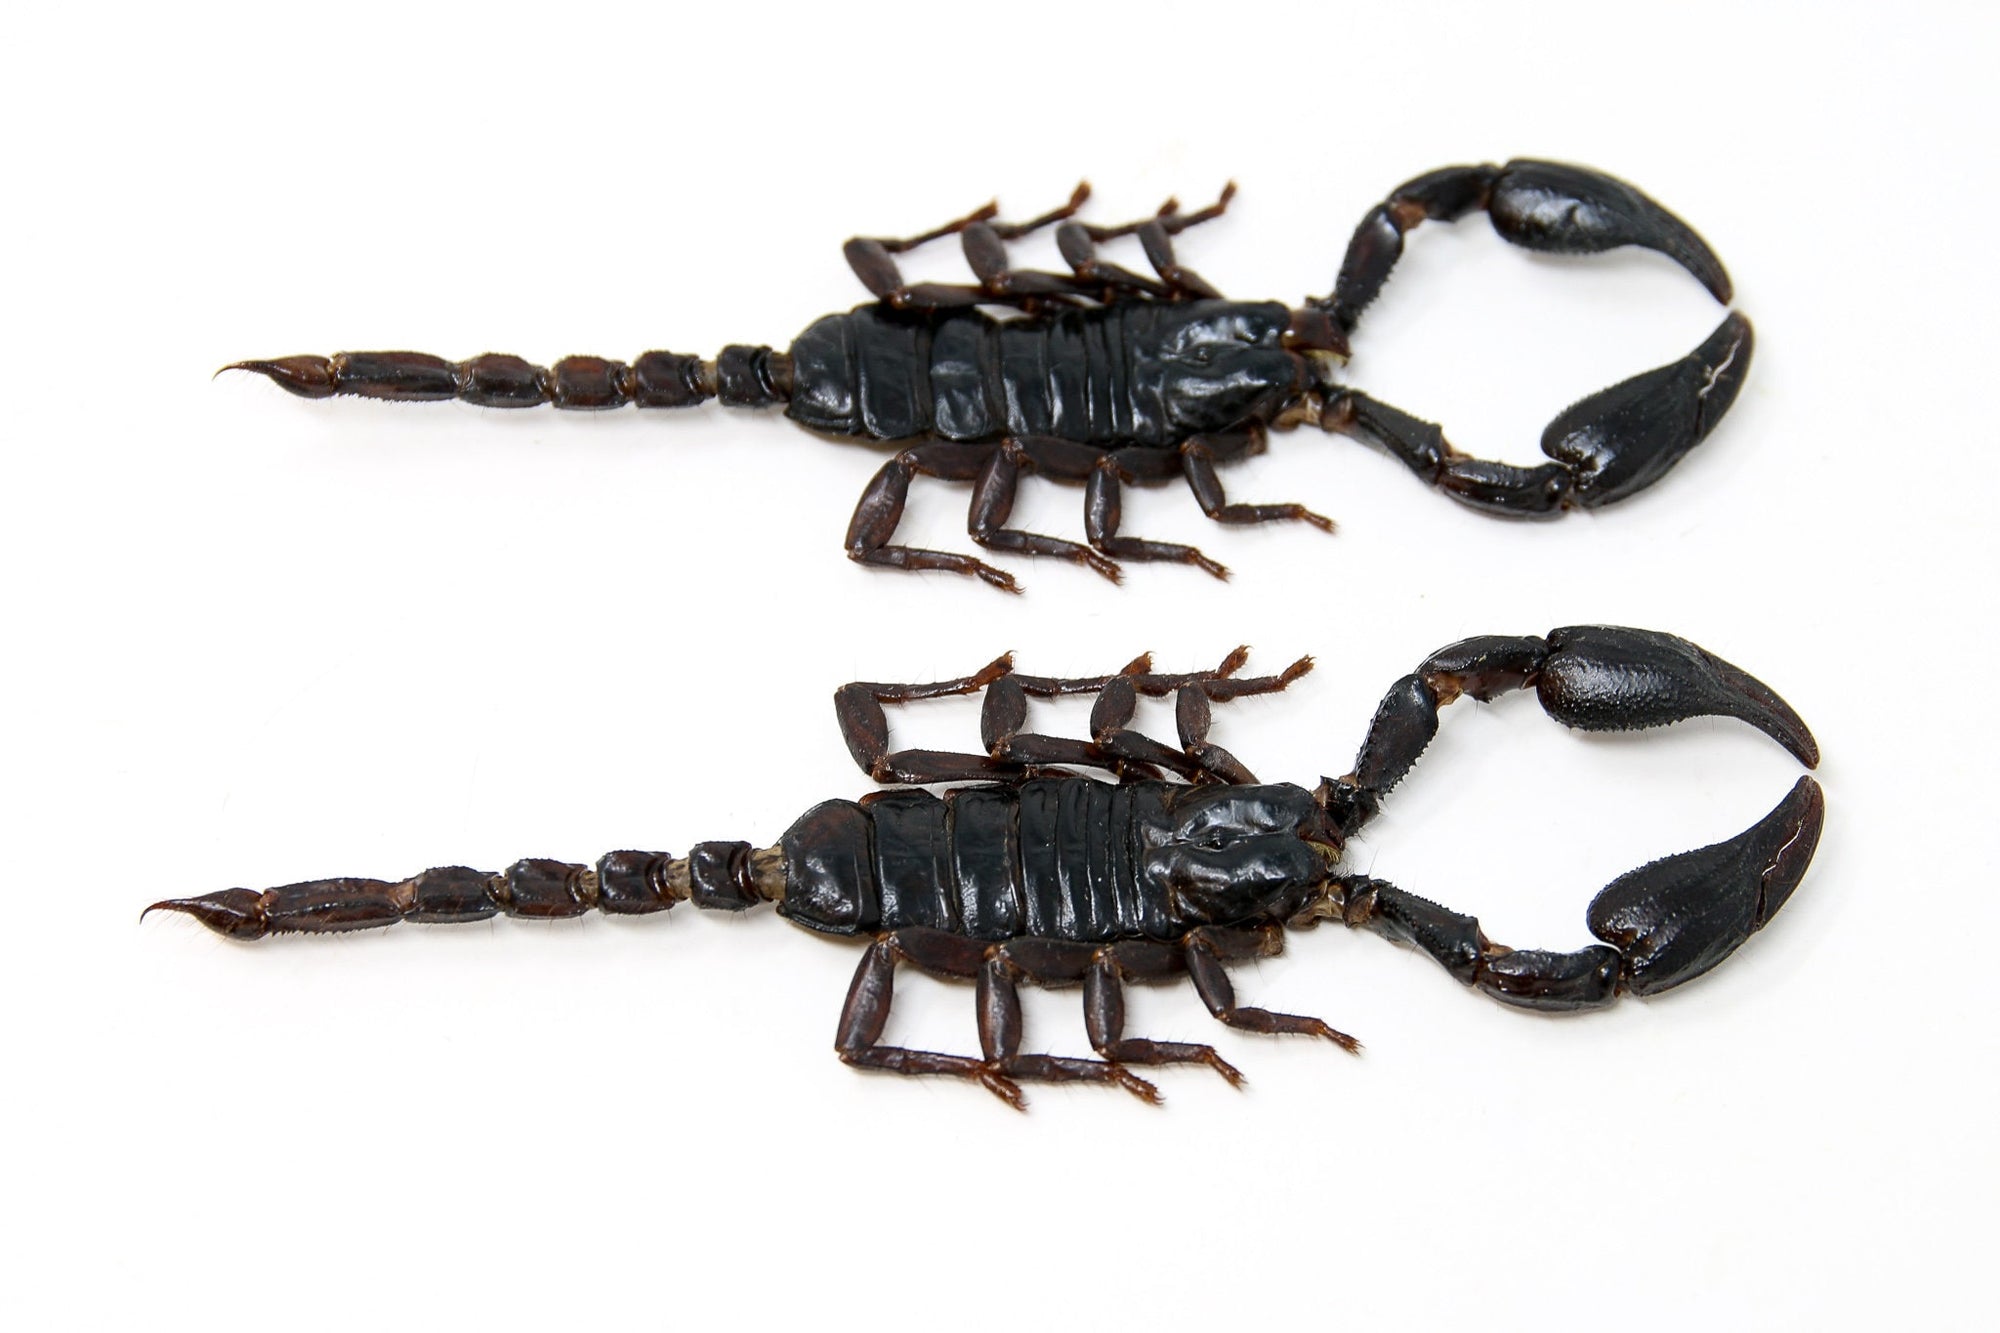 2 x Thai Black Scorpions (Heterometrus spinifer) SIZE M/L (120-160mm) A1 Entomology Specimens